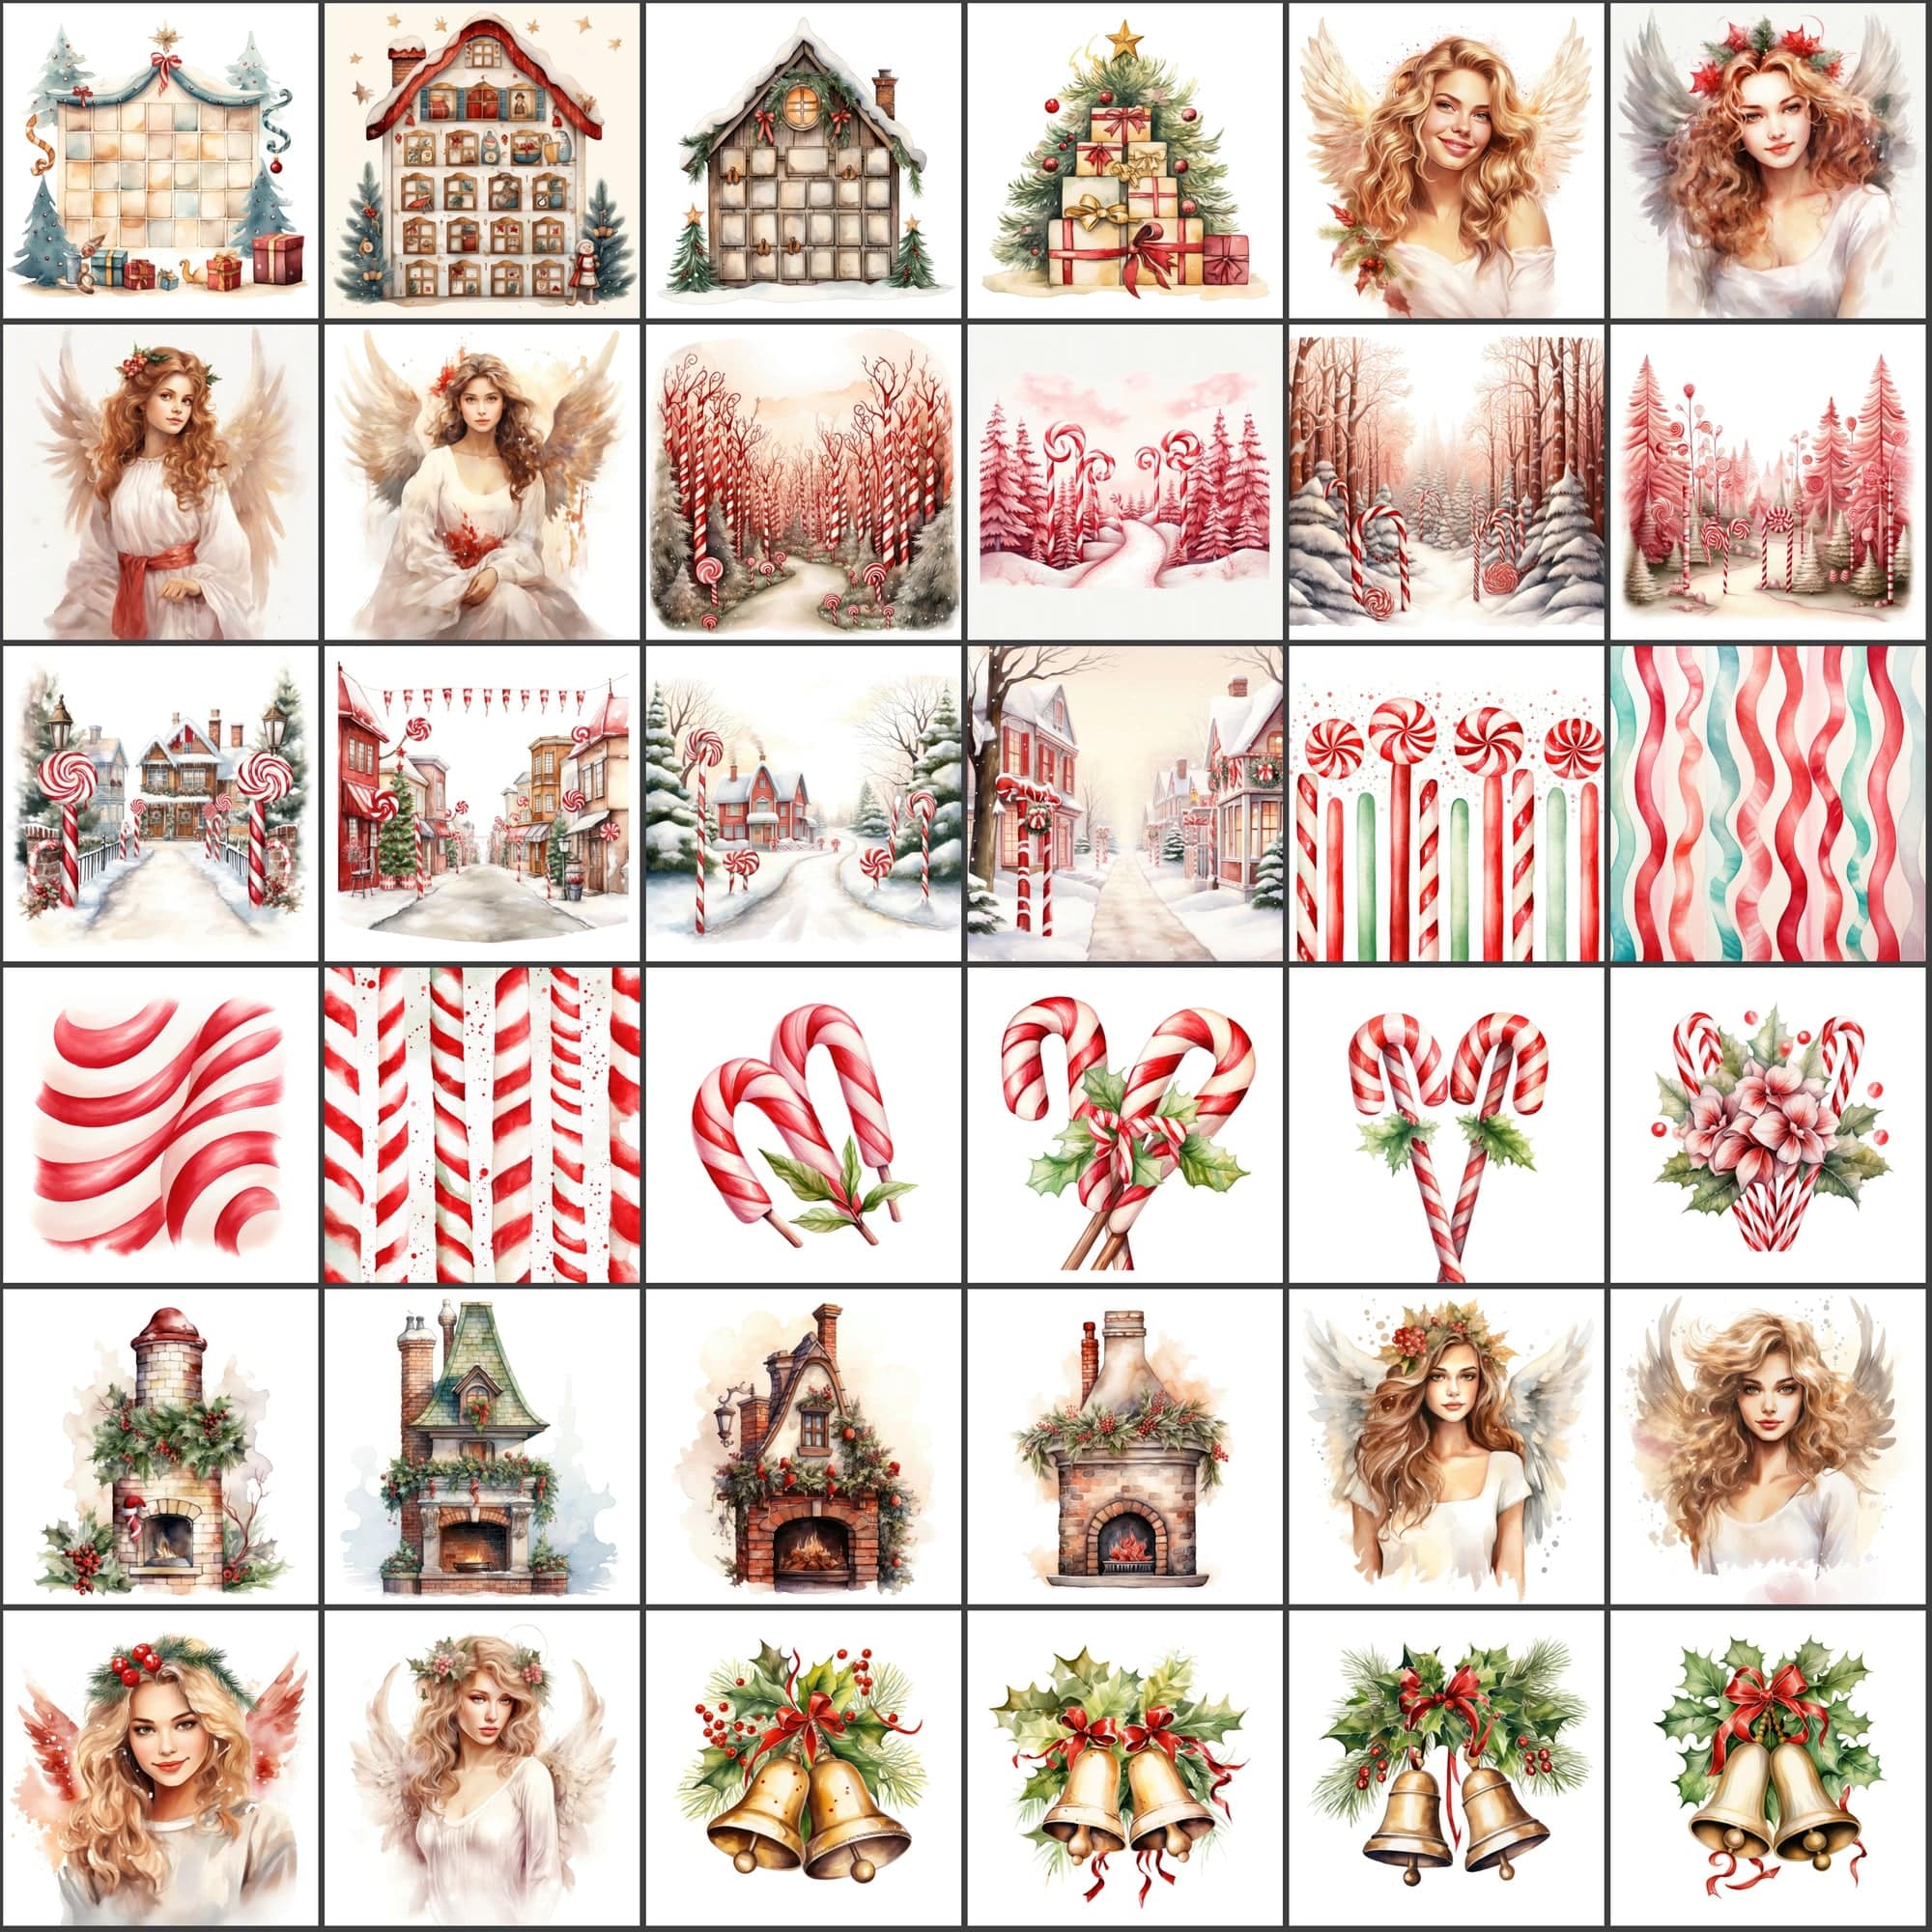 Vibrant Watercolor Christmas Illustrations! Christmas Tree, Santa Claus, Snowflakes, and More! Digital Download Sumobundle